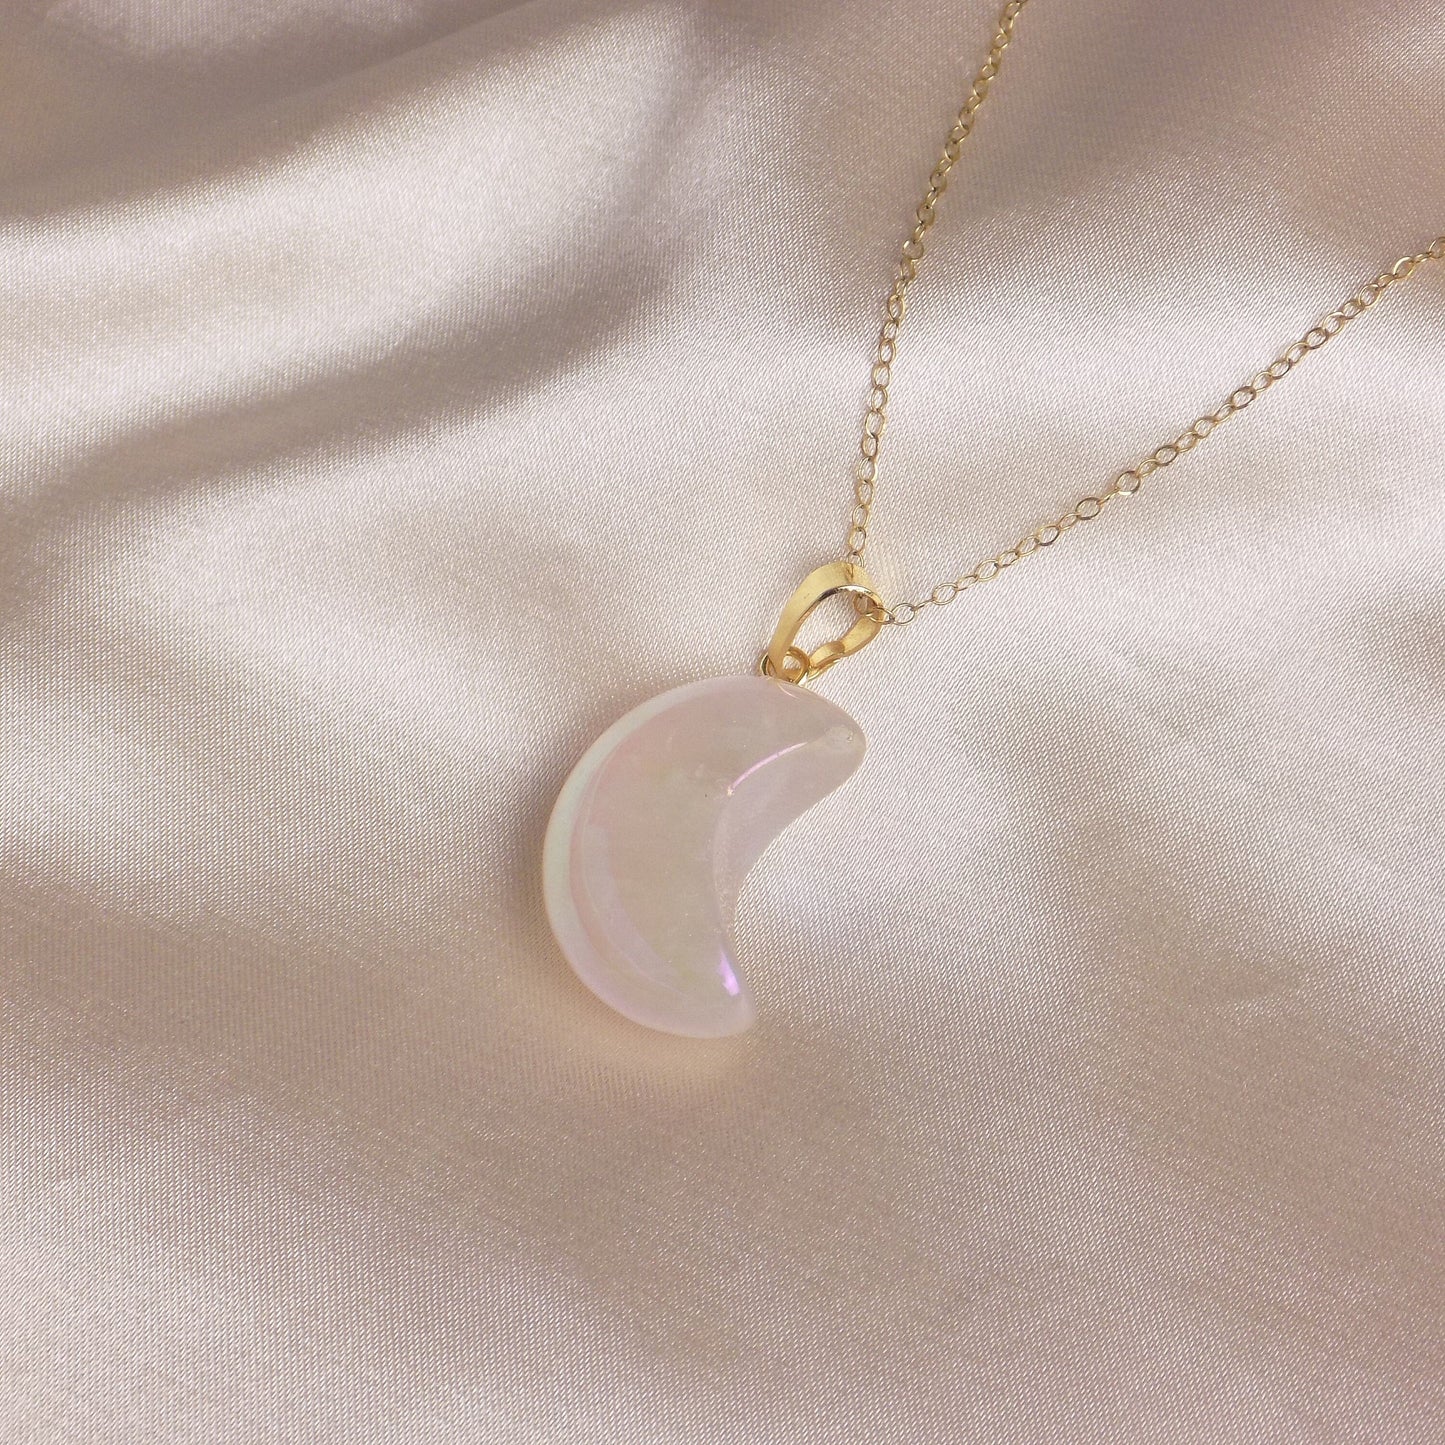 Aura Quartz Necklace - Rose Quartz Moon Pendant, Christmas Gift Women, M7